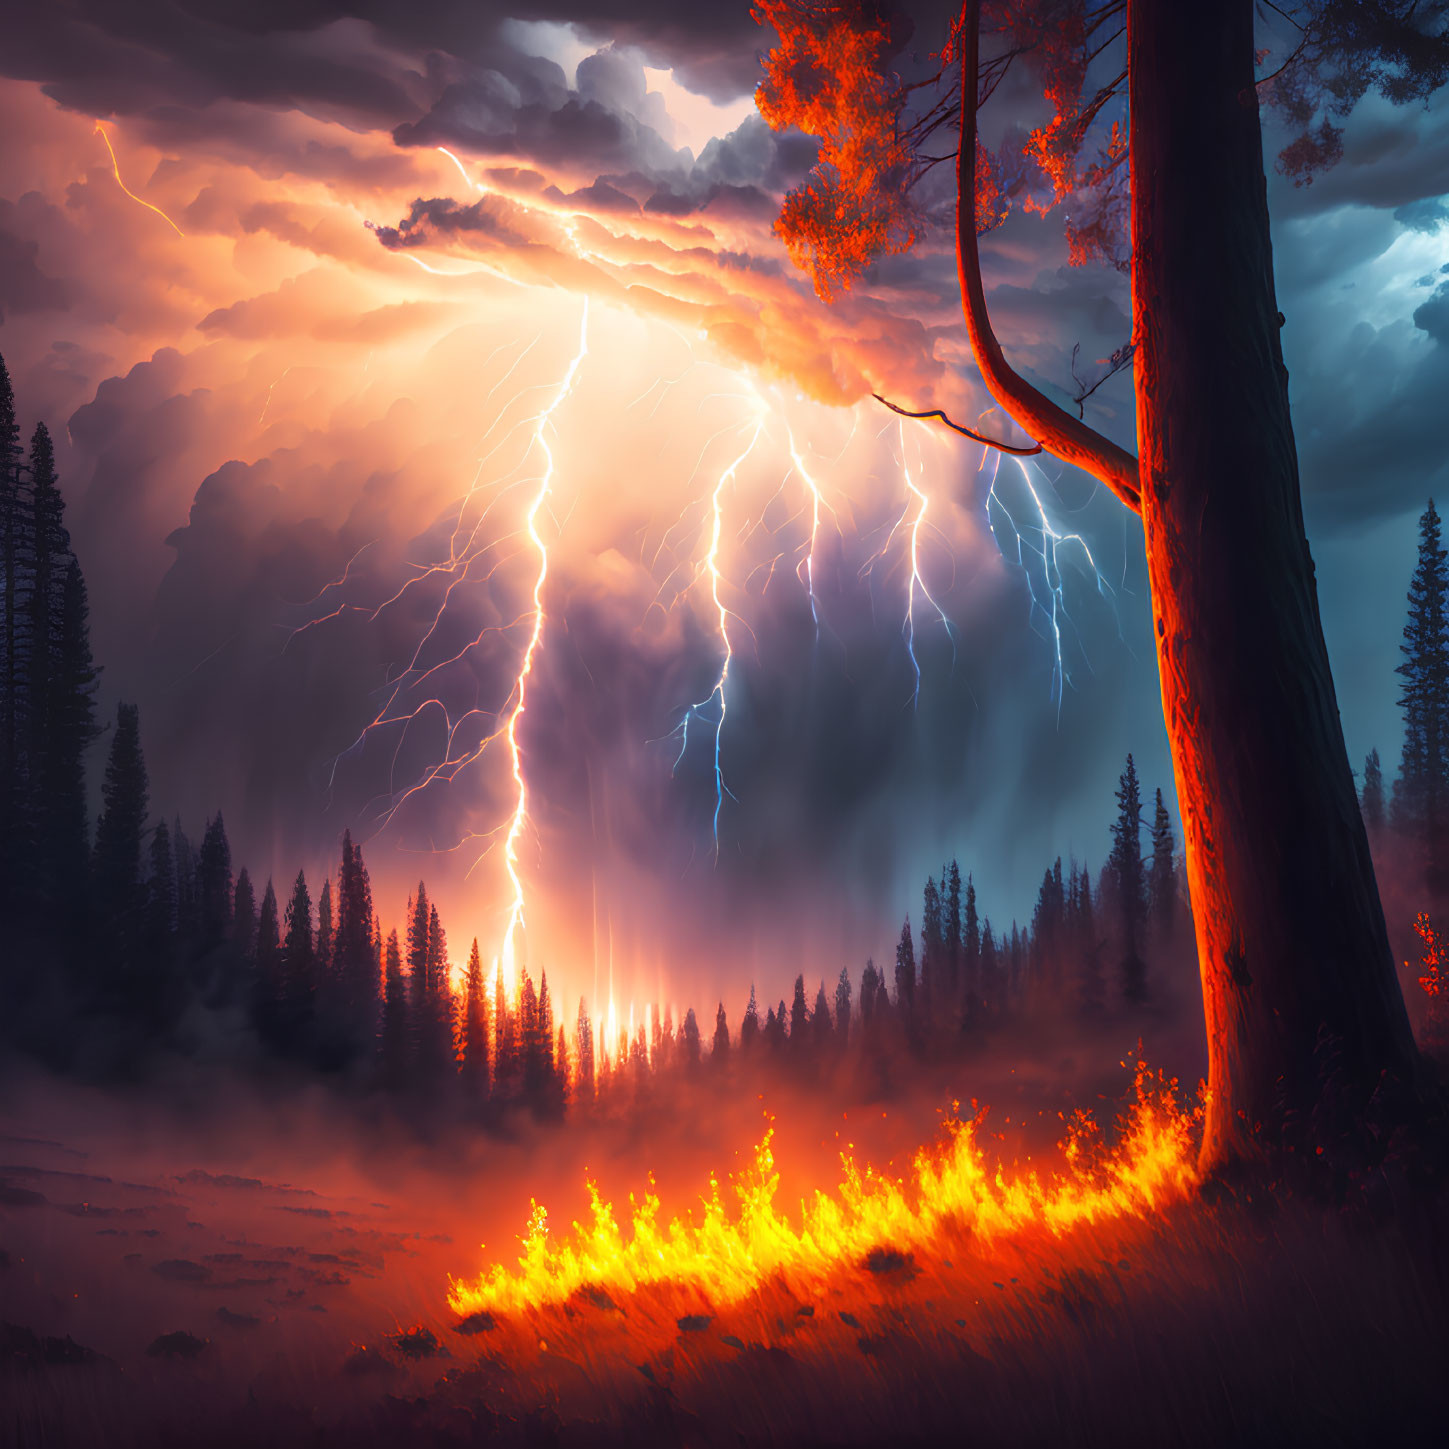 Stormy sky, fiery forest, lightning, large tree, blazing wildfire